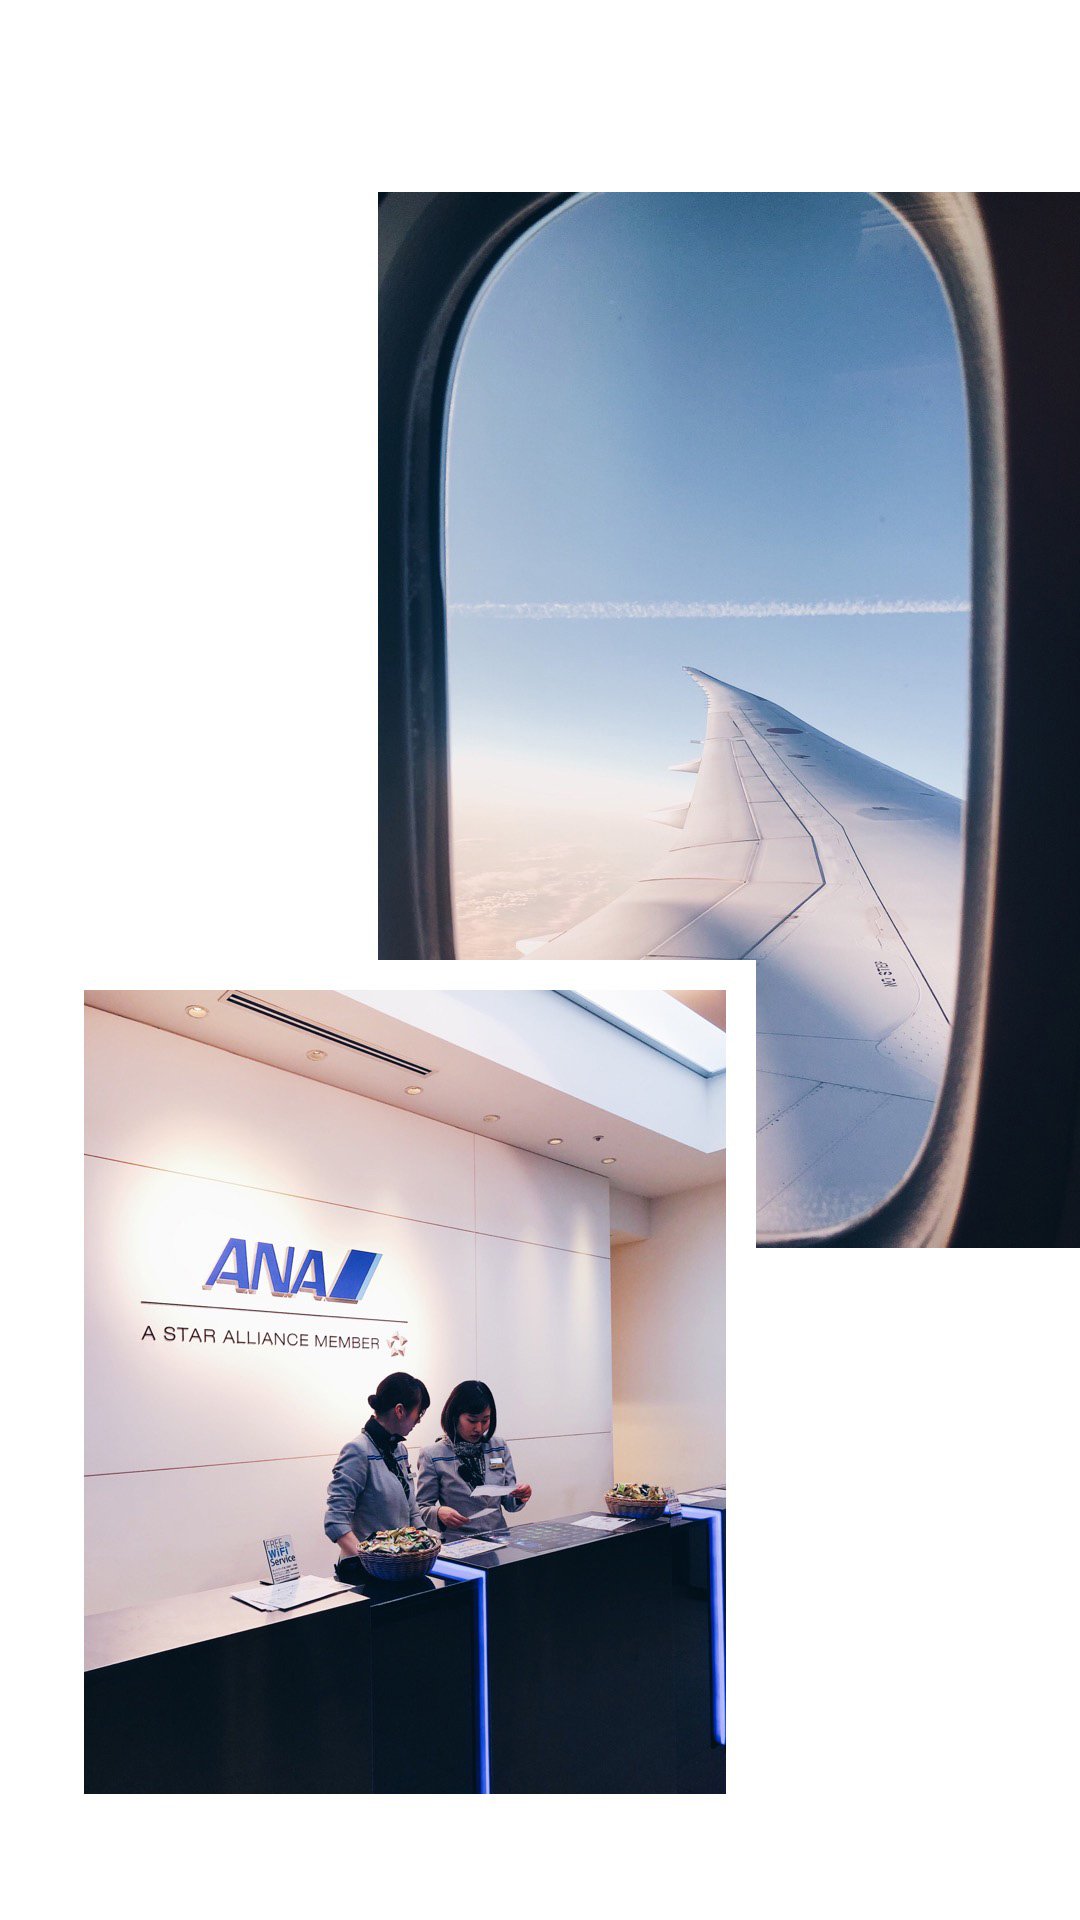 ANA Dreamliner flight from Vienna to Tokyo